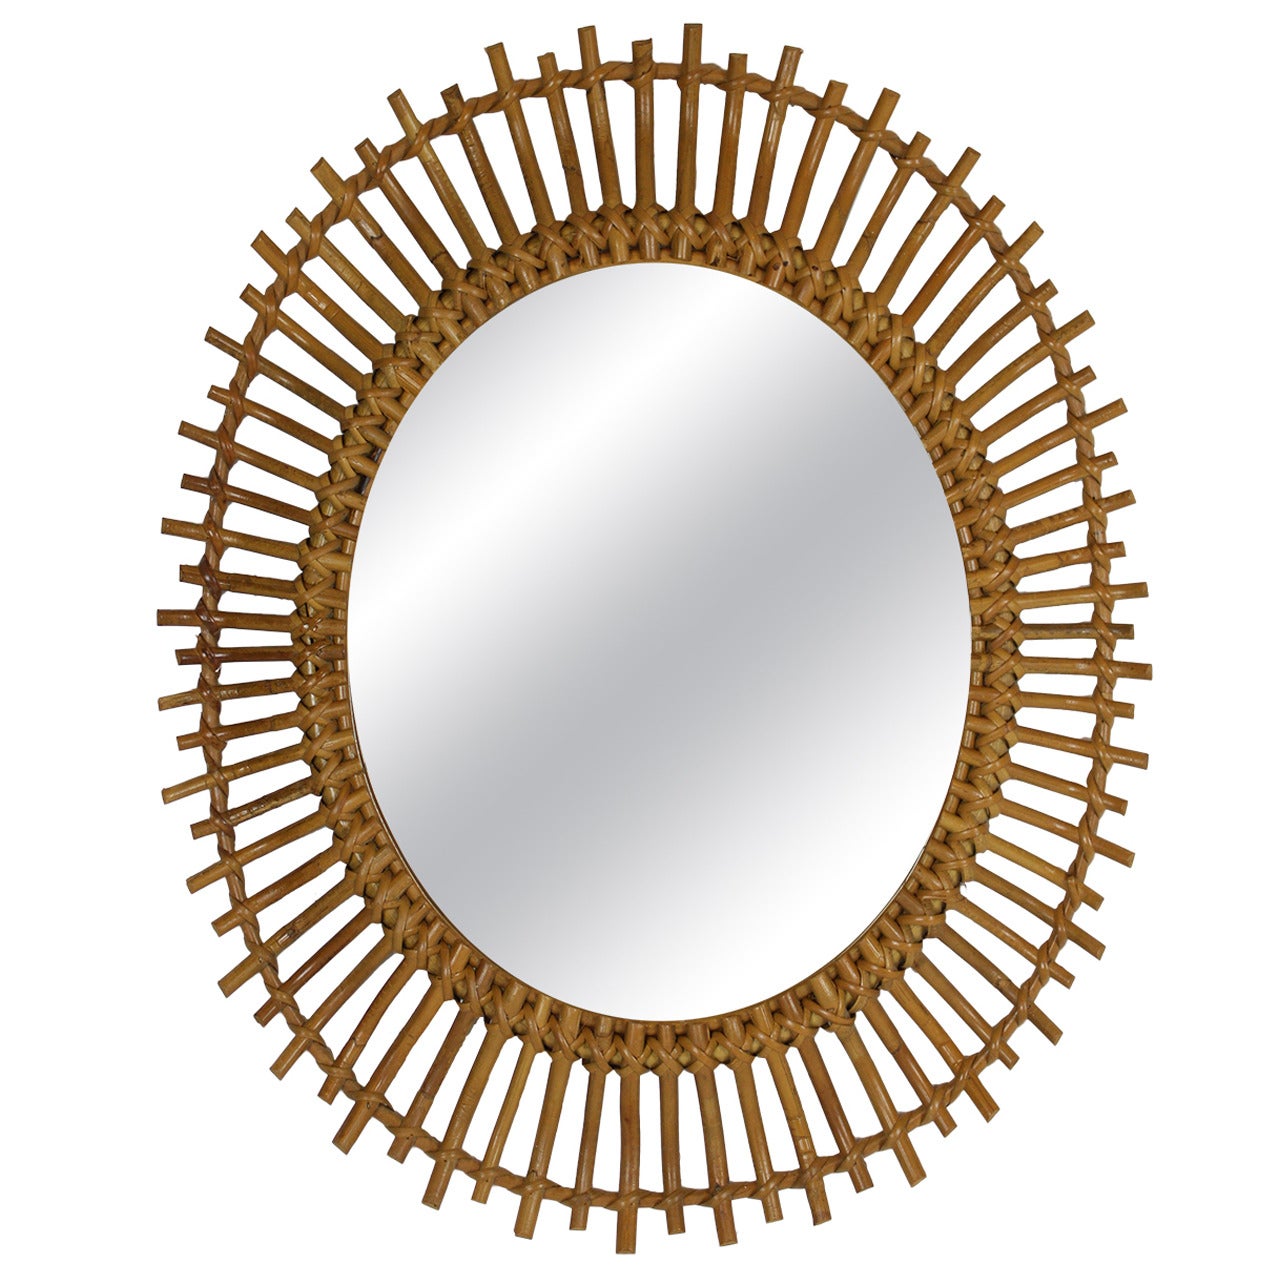 Bamboo and Rattan Sunburst Oval Mirror